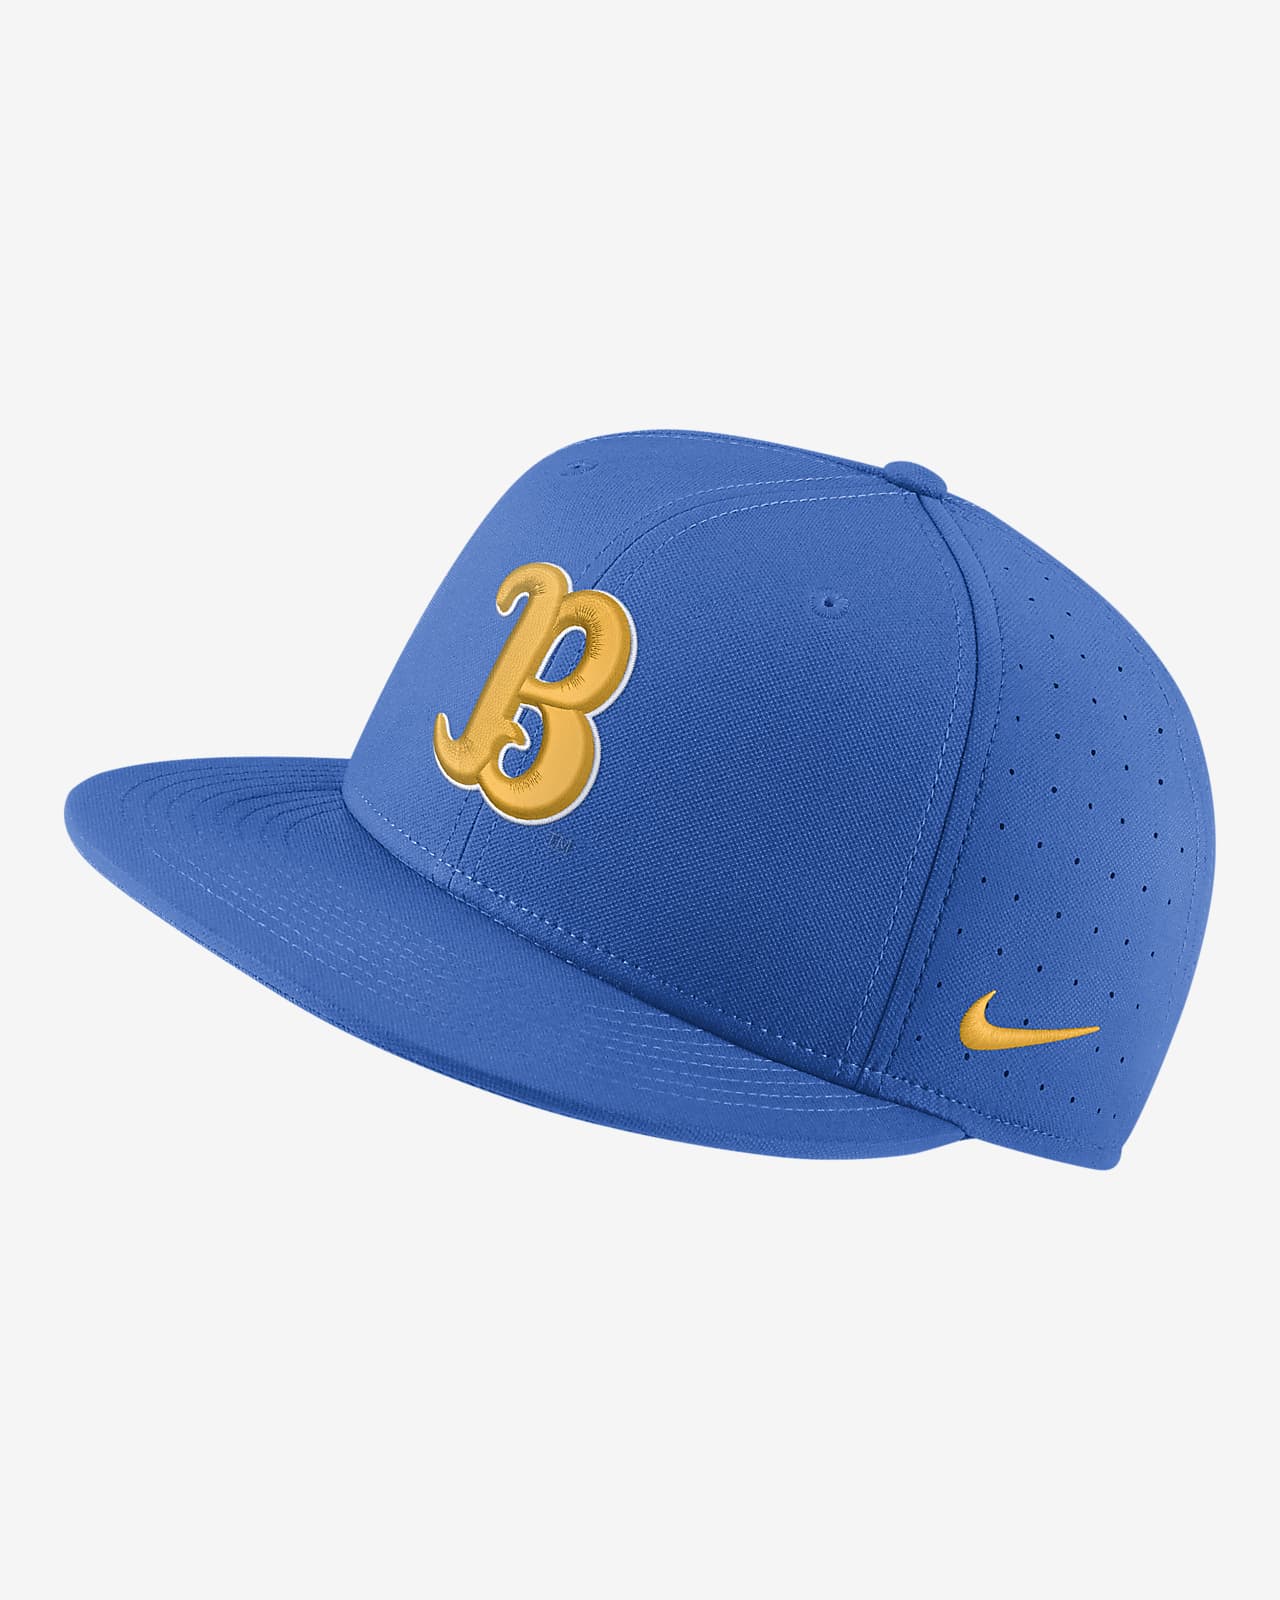 UCLA Nike College Fitted Baseball Hat